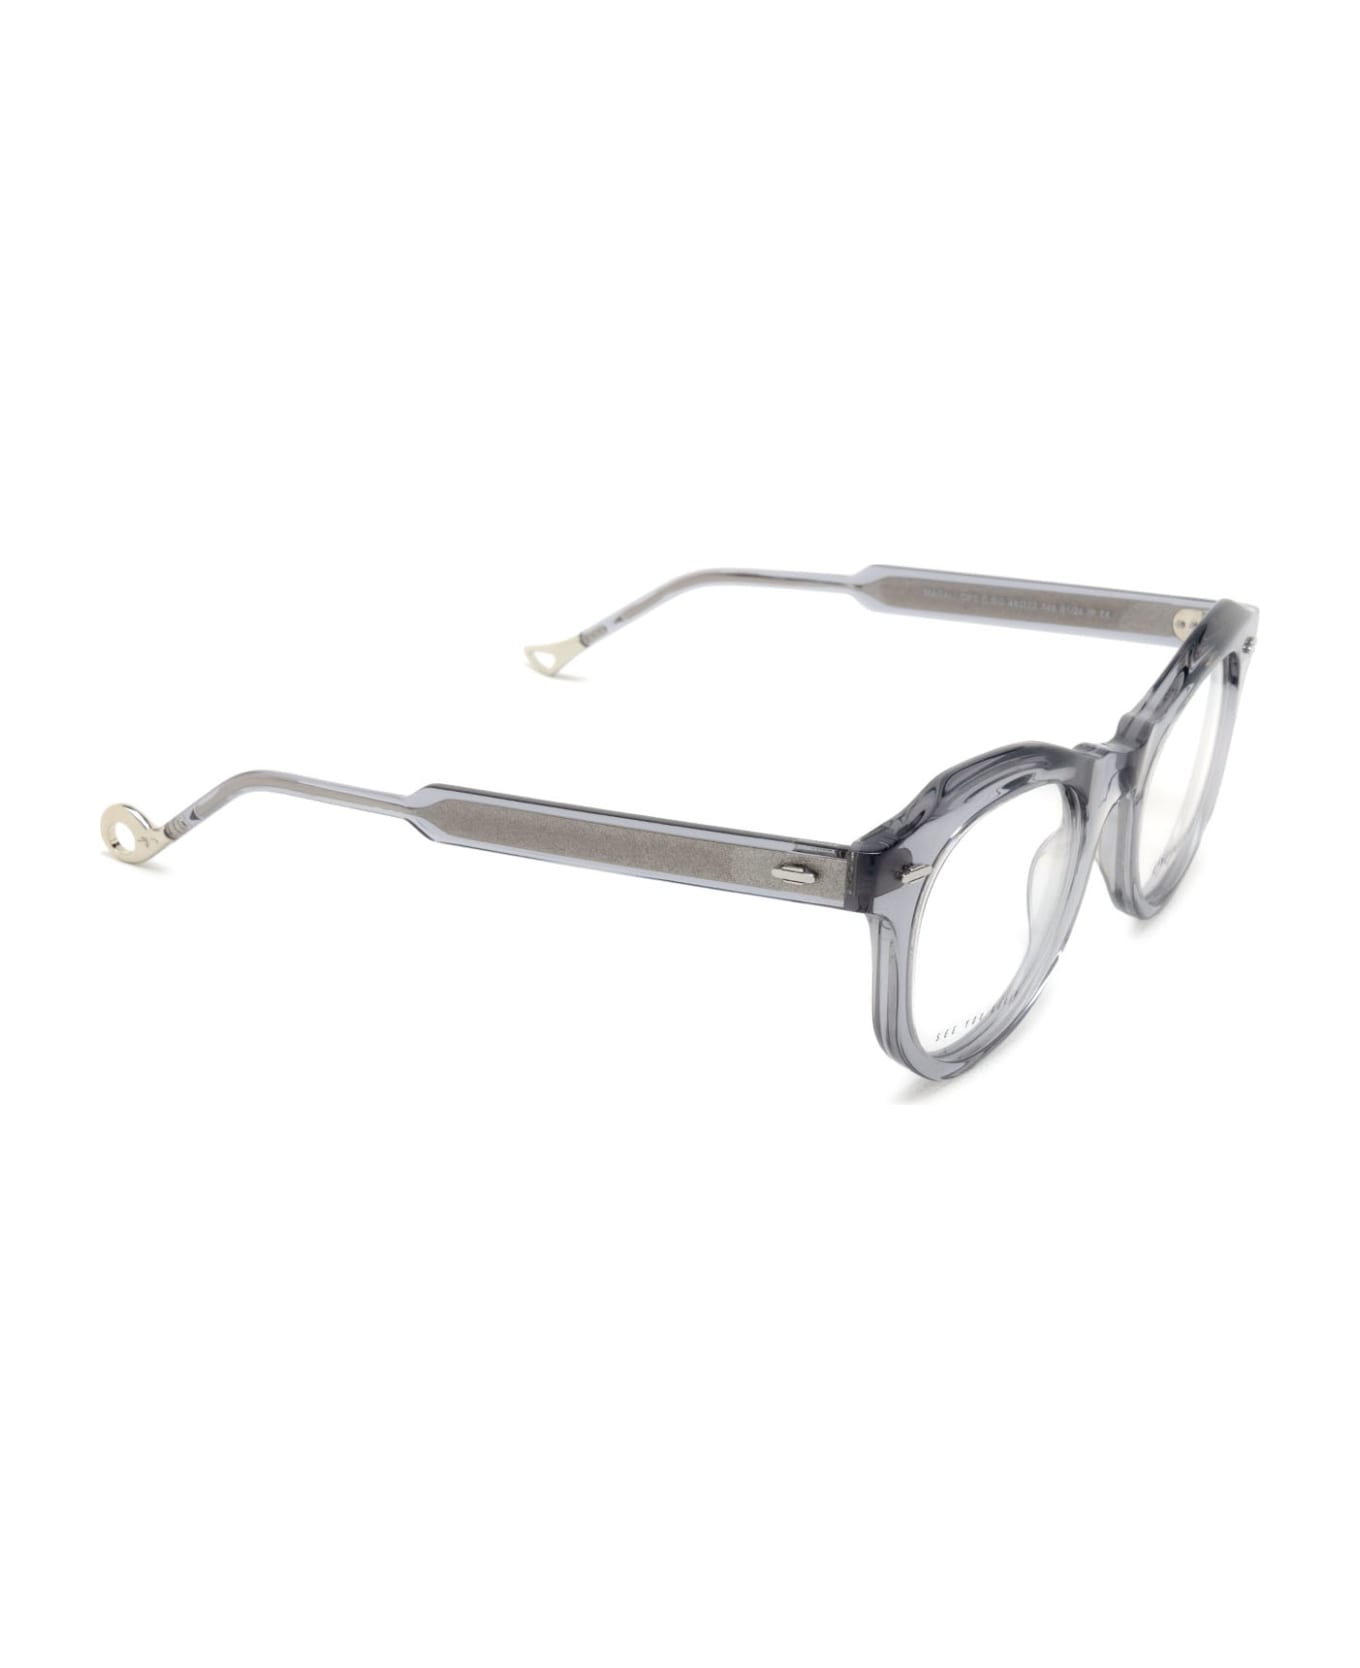 Eyepetizer Magali Opt Grey Glasses - Grey